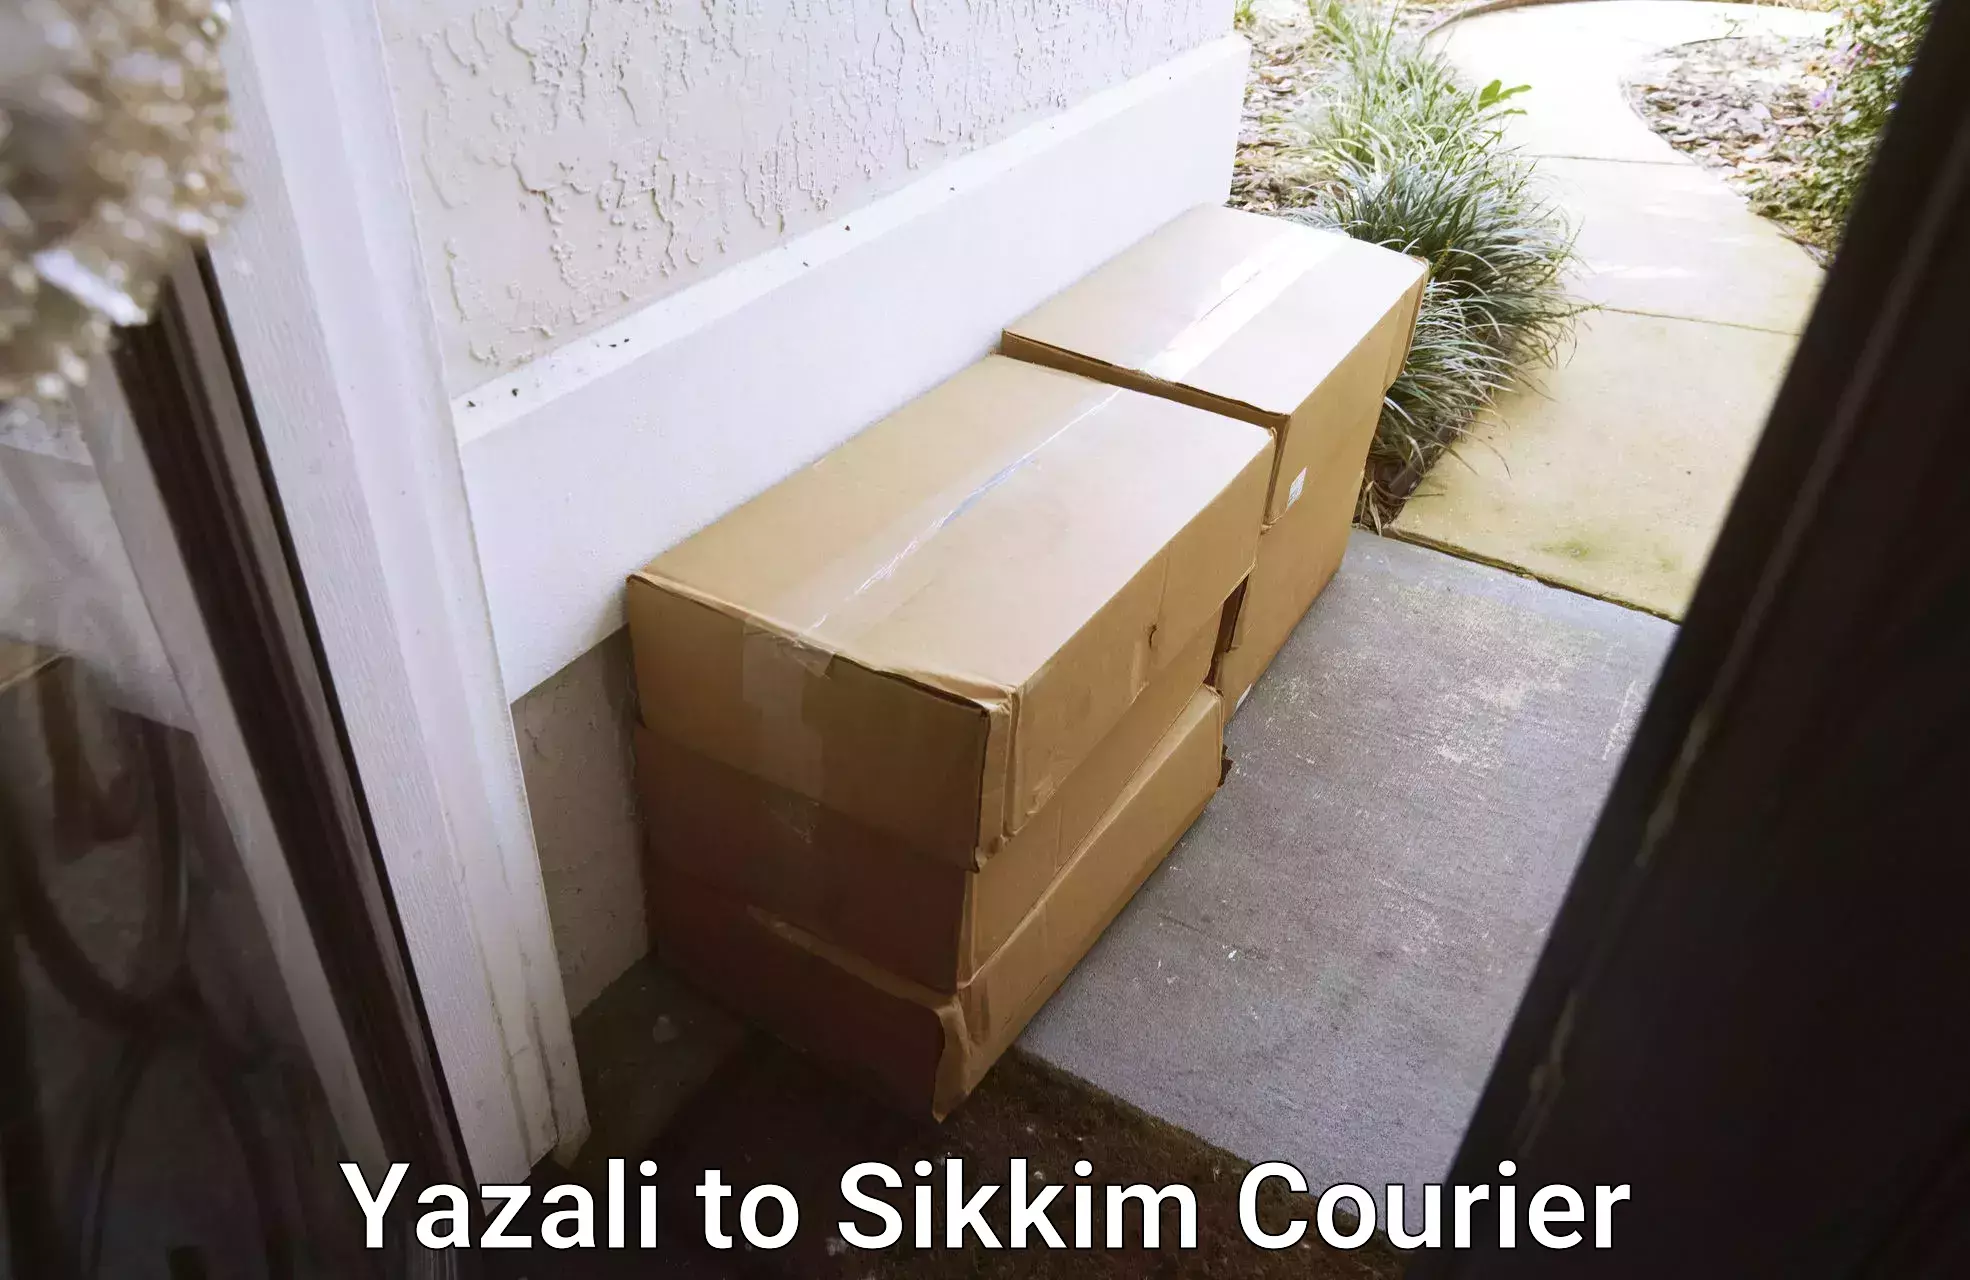 Full-service courier options Yazali to Geyzing